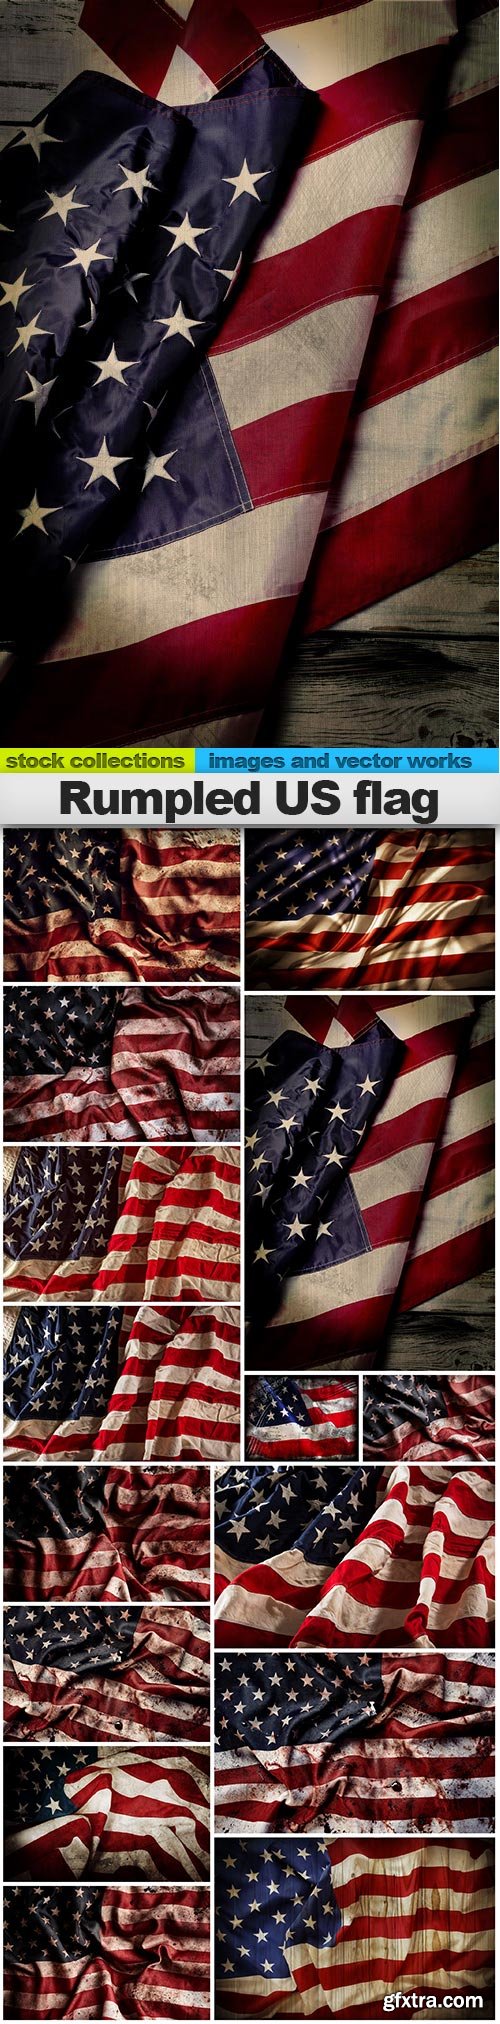 Rumpled US flag, 15 x UHQ JPEG